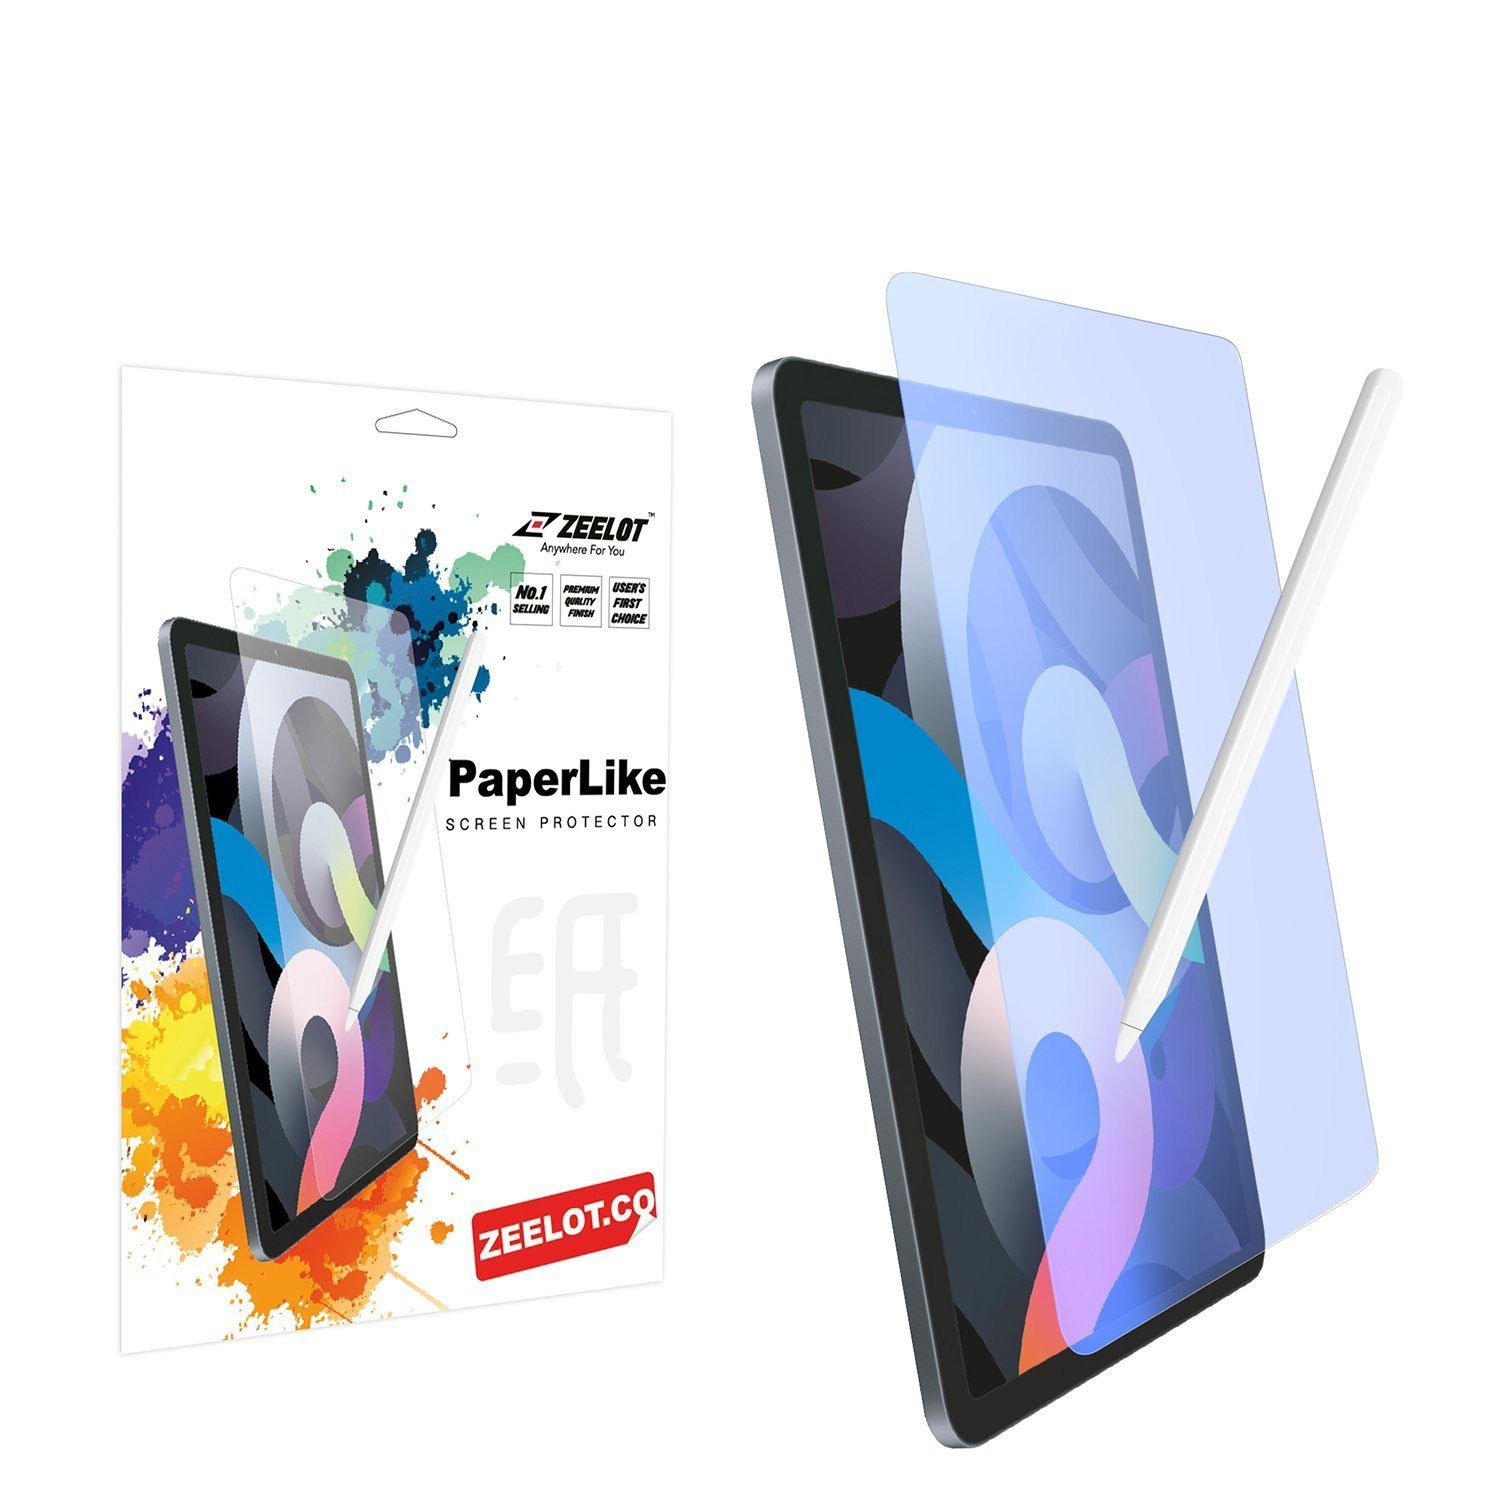 ZEELOT Paper Like Screen Protector for iPad Pro 12.9" (2021/2018), Anti Blue Ray Default ZEELOT 